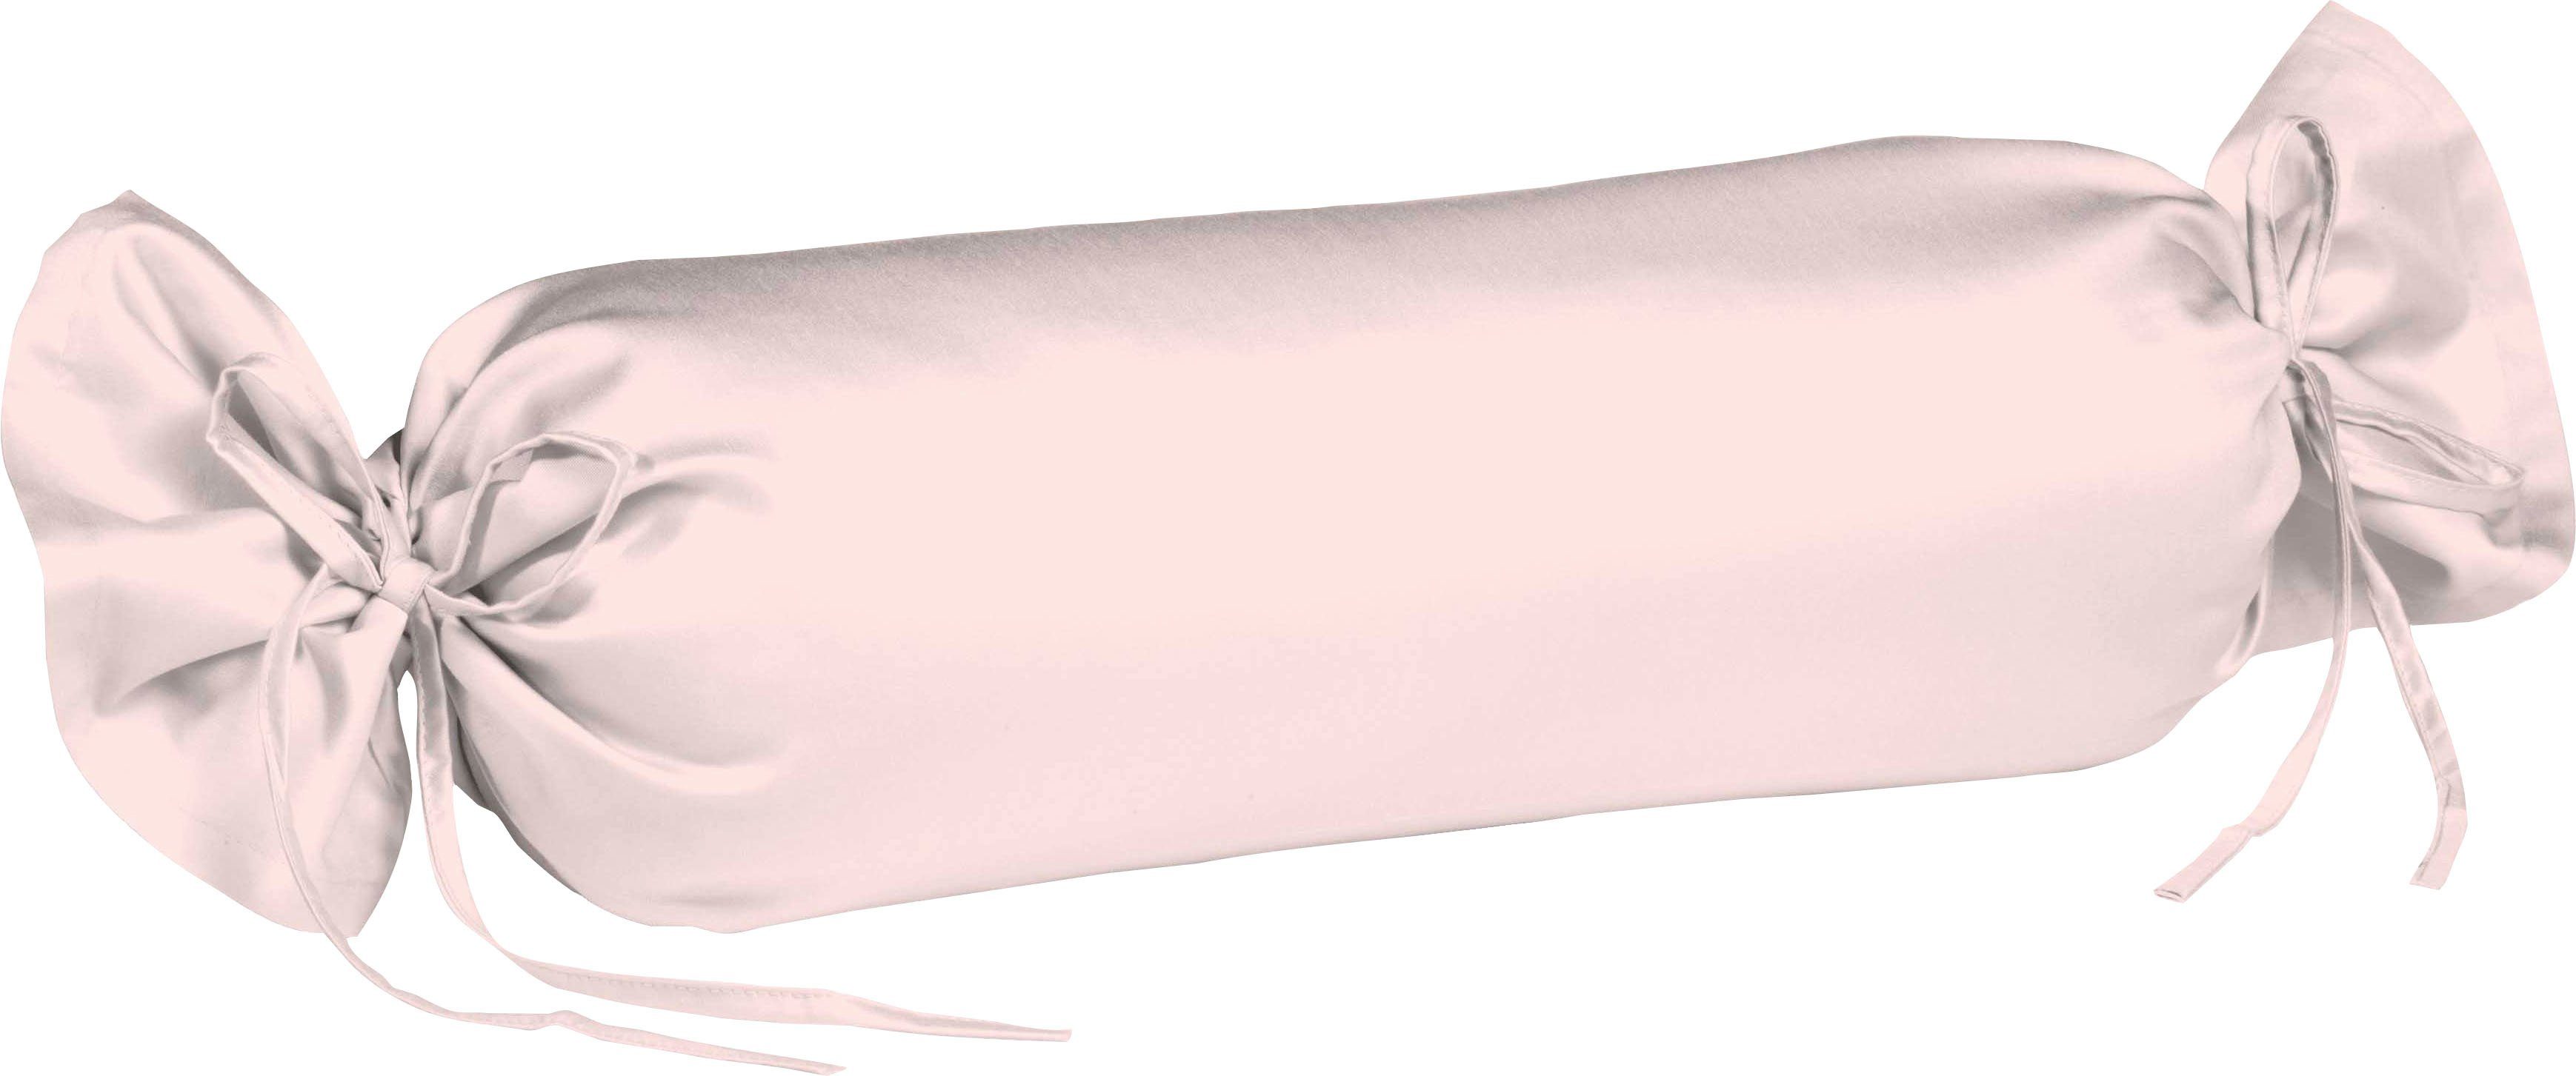 fleuresse Interlock Stück), Qualität Nackenrollenbezug bügelfreier Colours in rosé Jersey, (2 Interlock